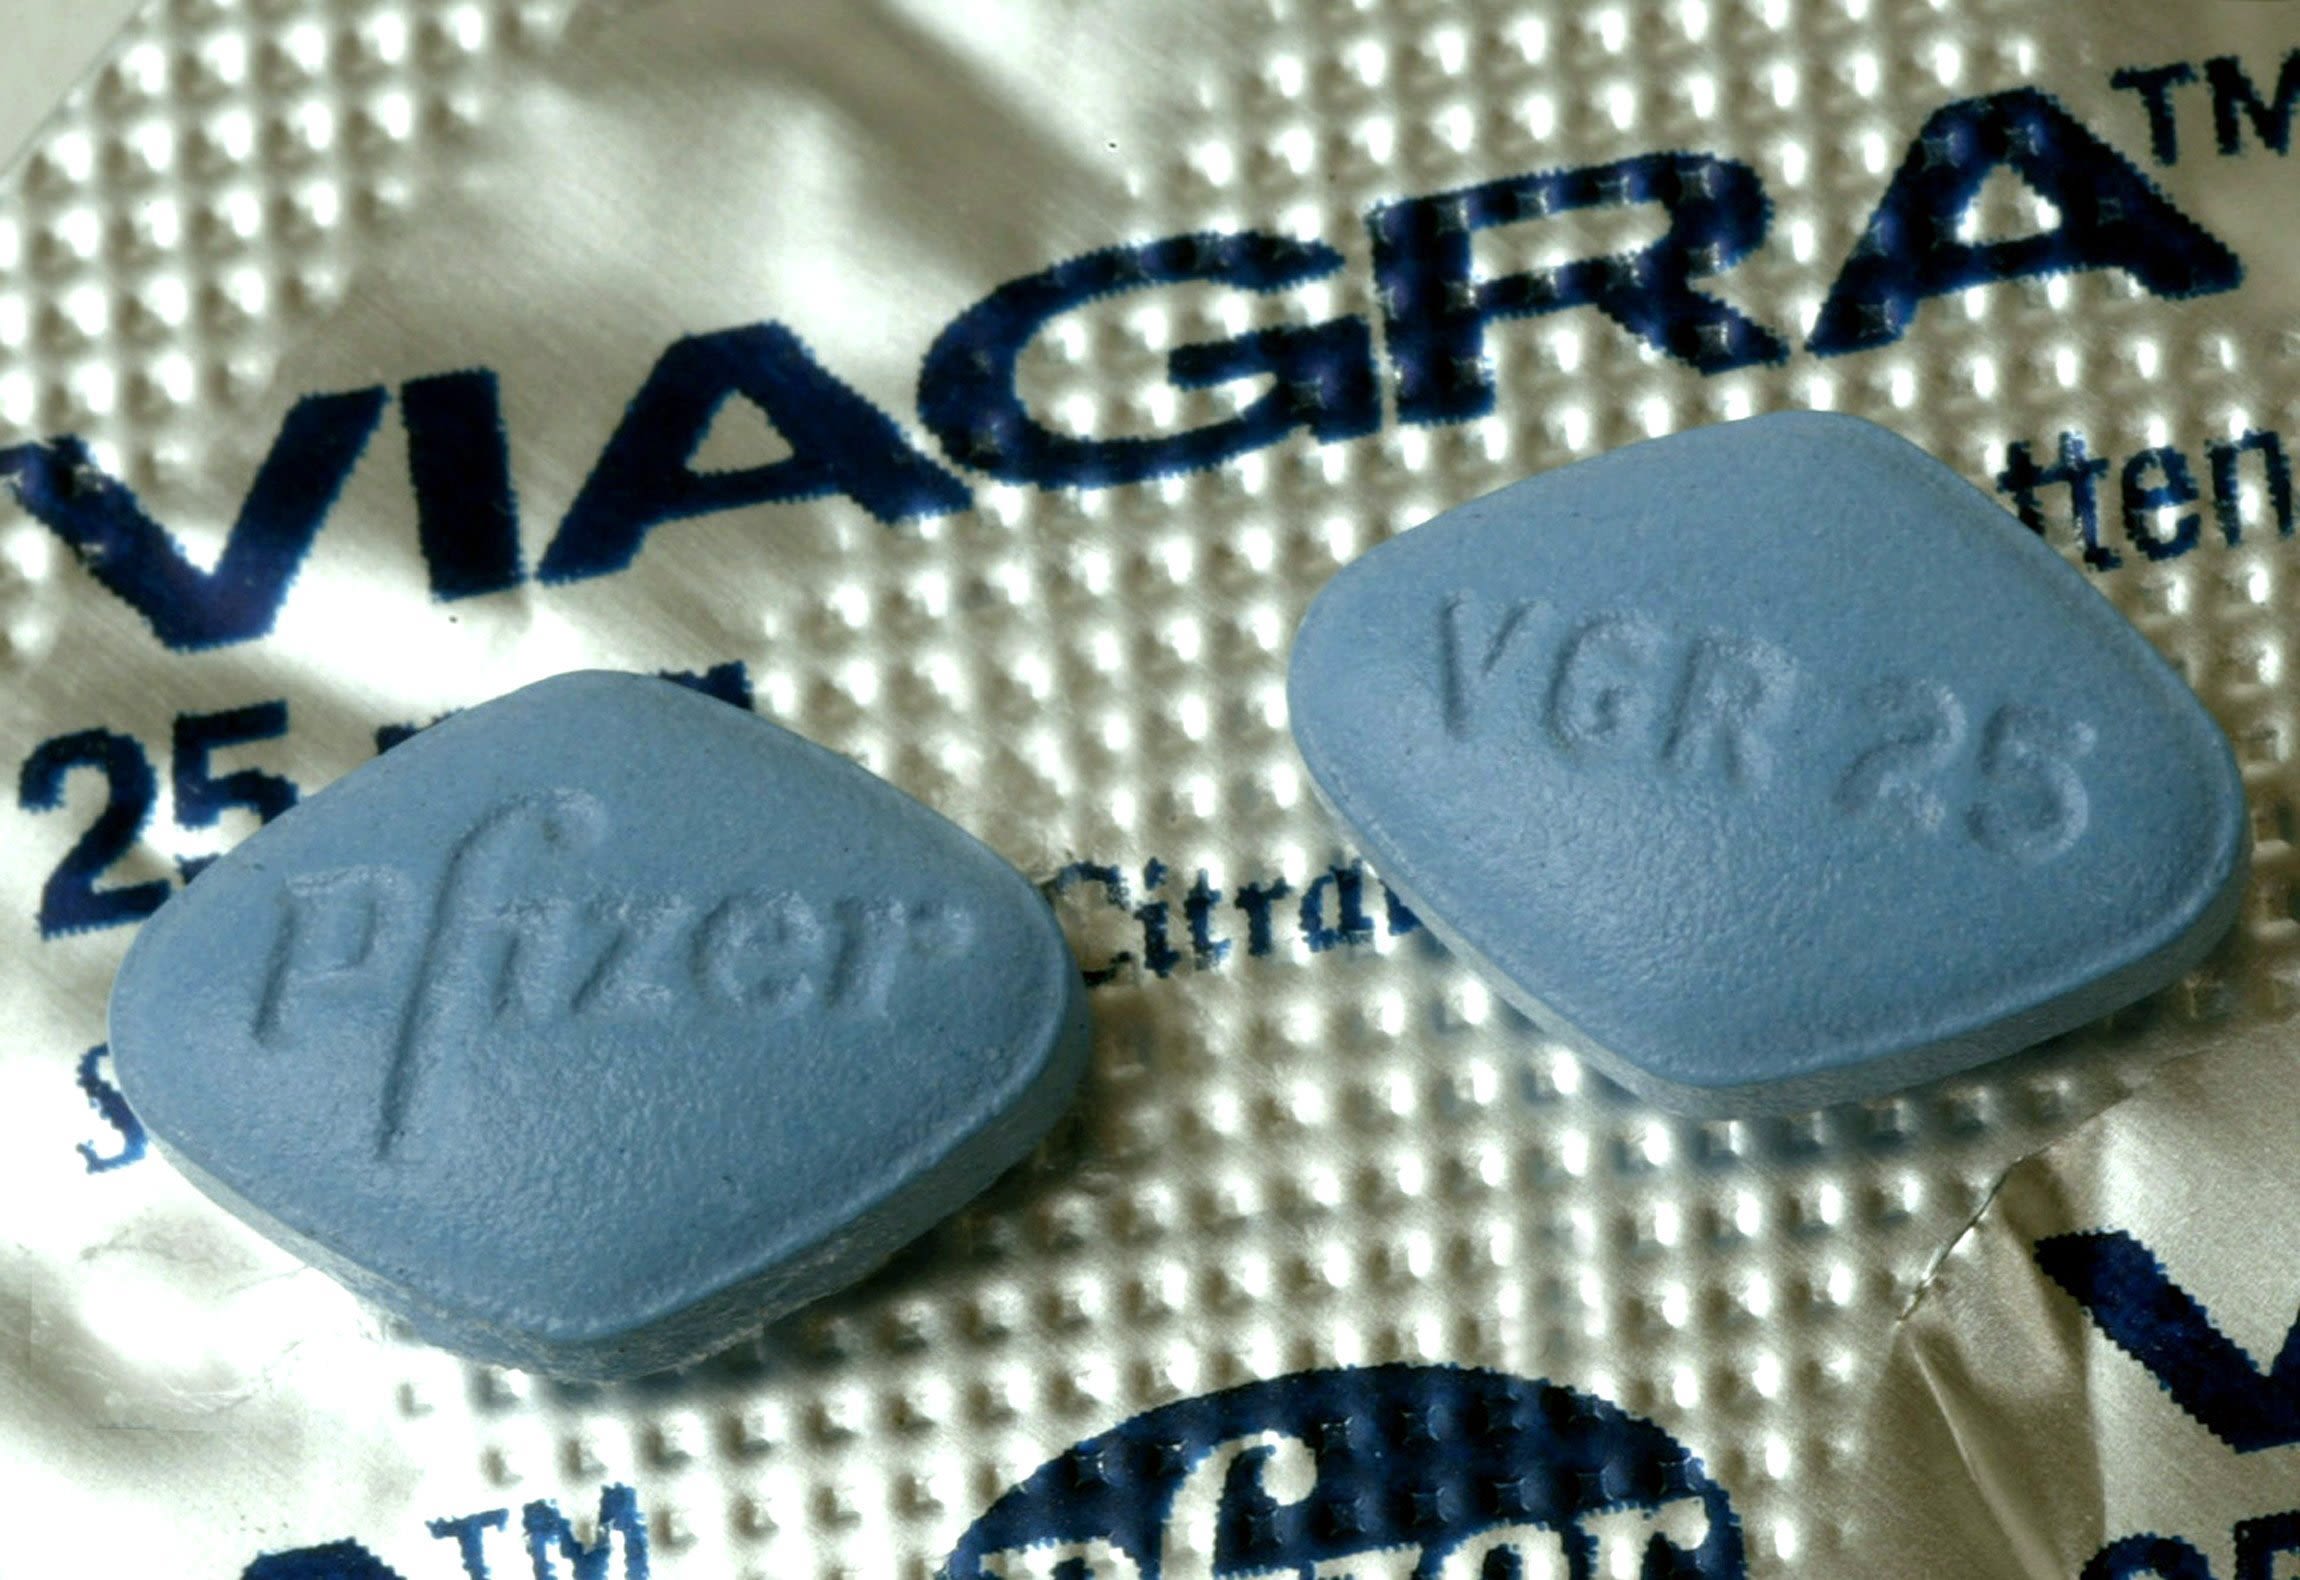 Viagra Effect In Fuck Videos - Viagra: The little blue pill that could | CNN